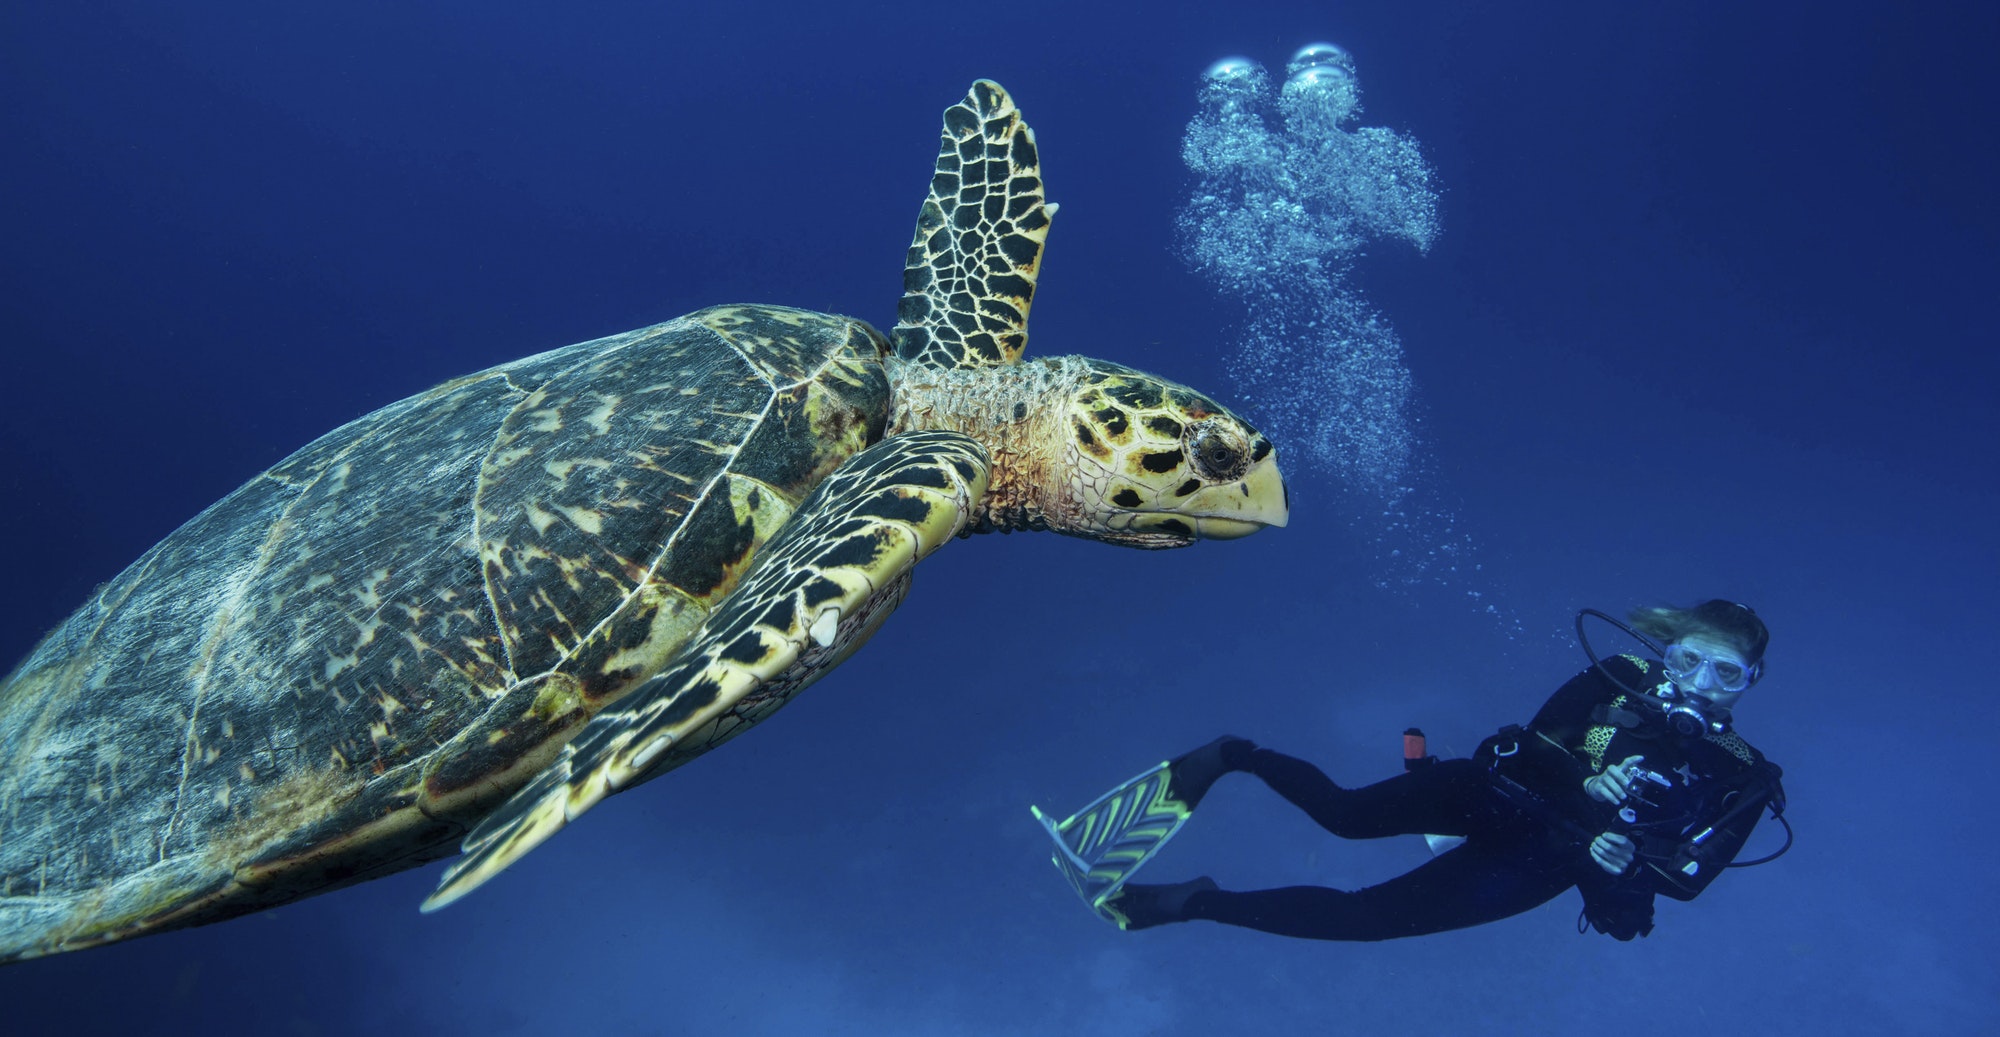 Scuba diver observing a Hawksbill turtle,Testudines Cheloniidae underwater.